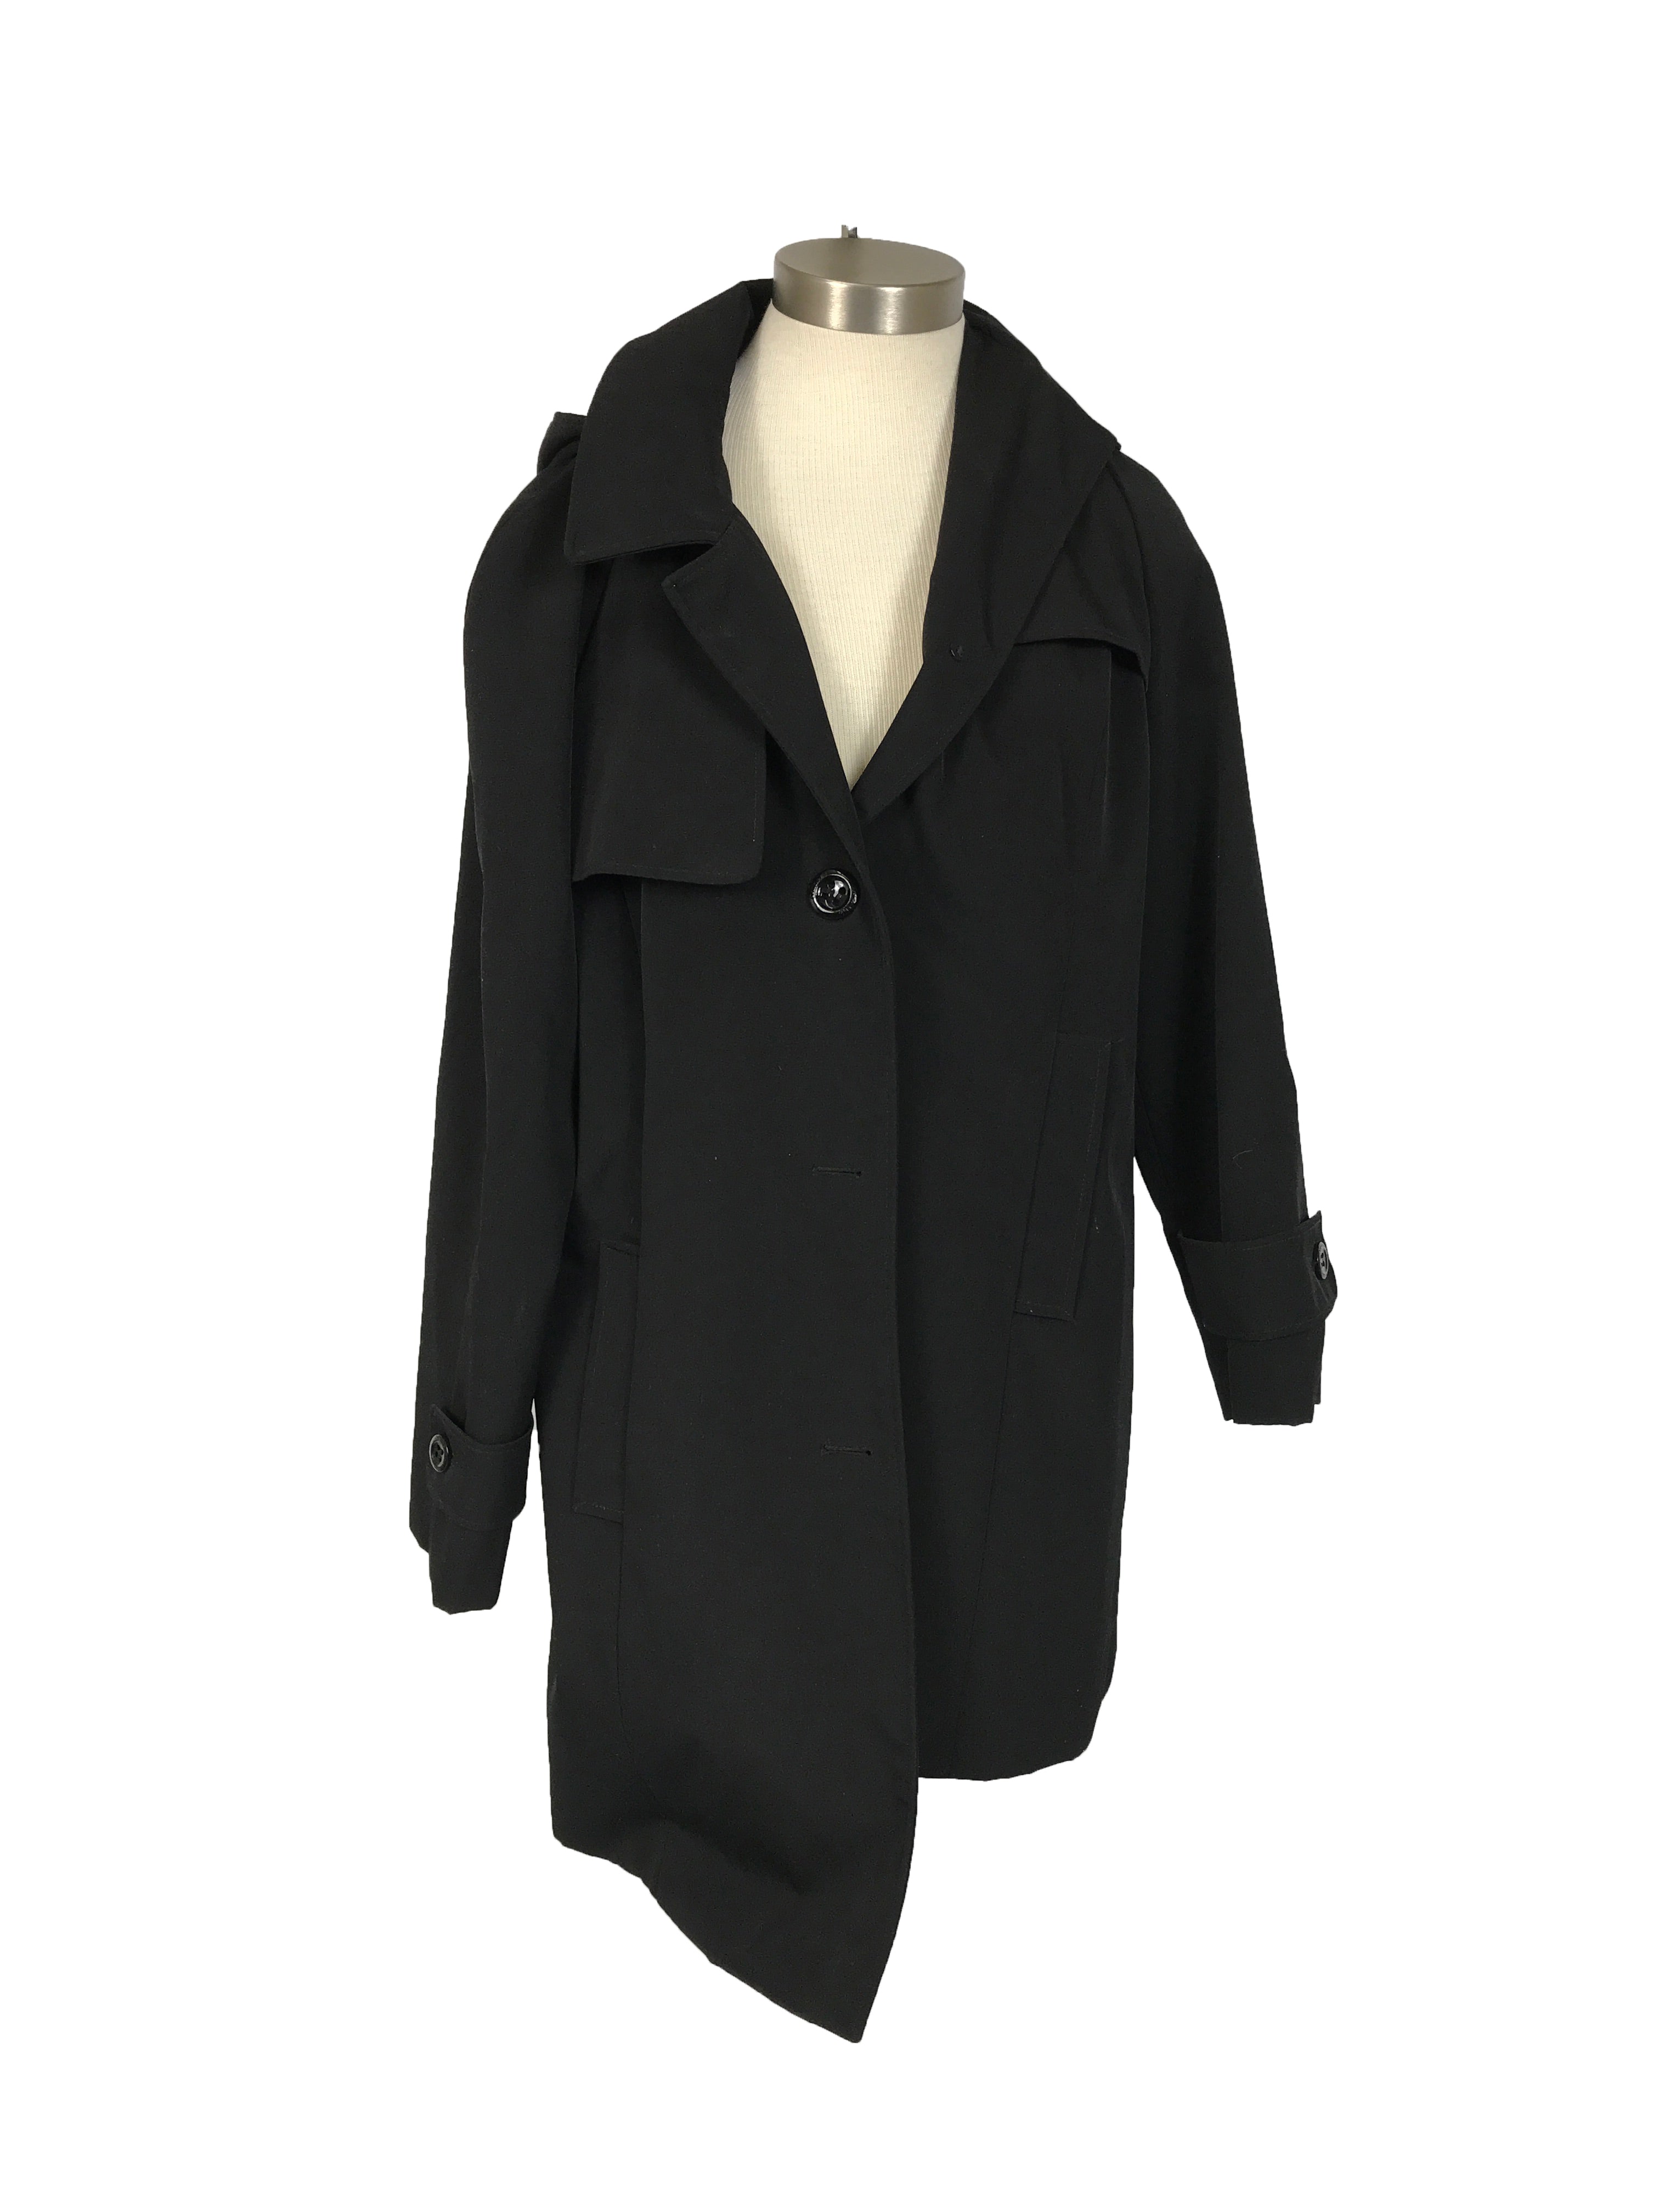 Calvin Klein Black Trench Coat Women's Size L